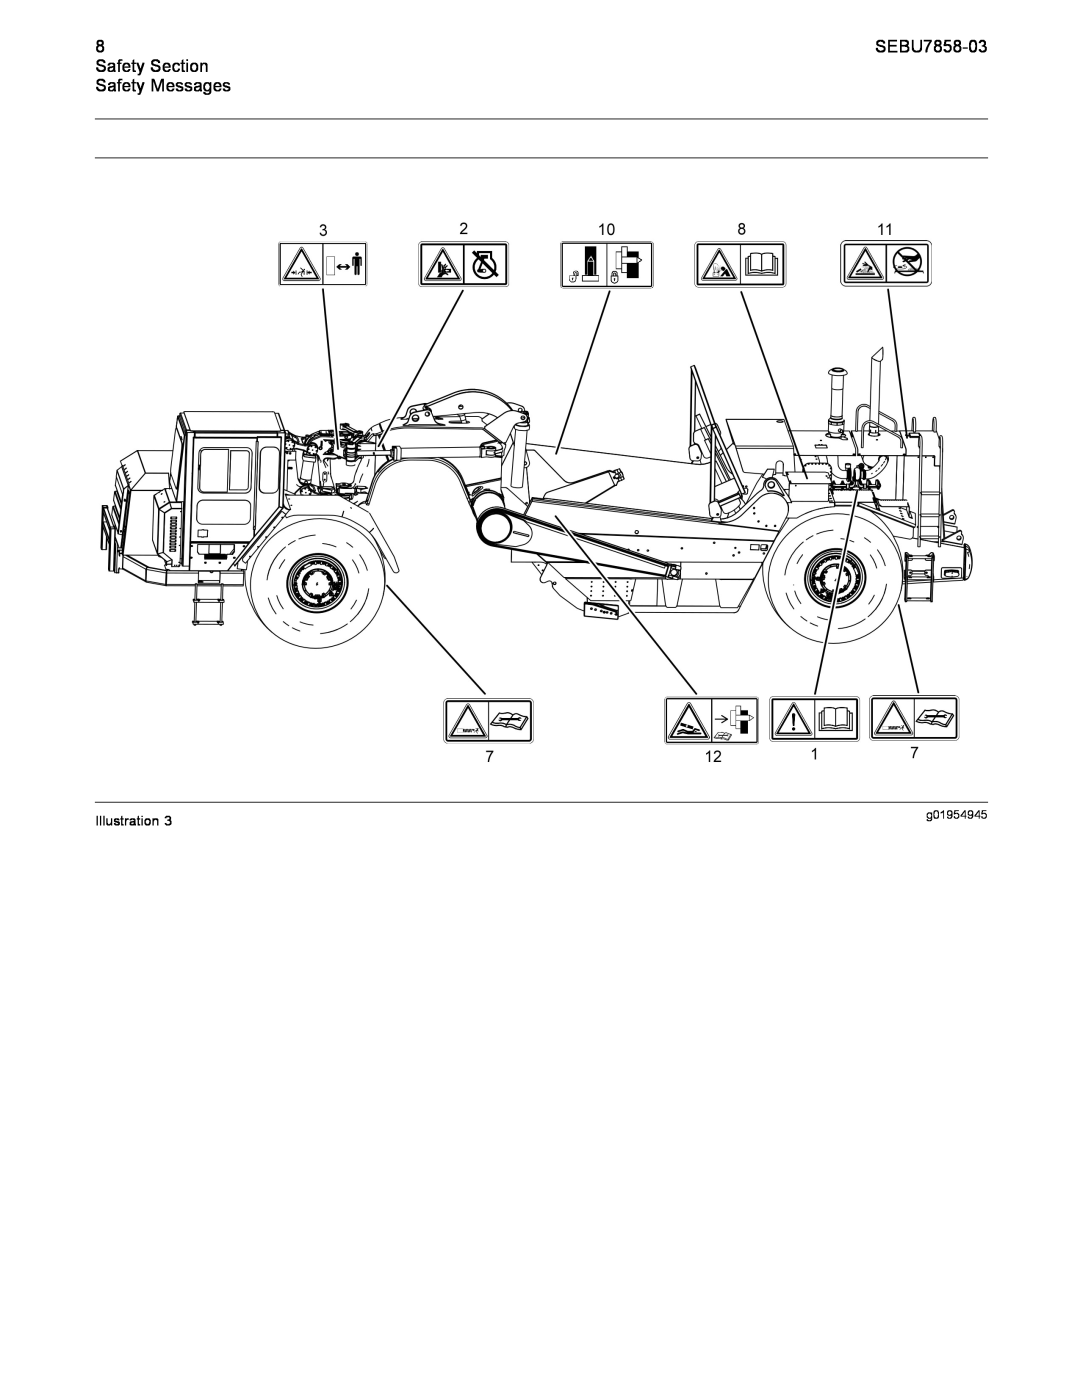 CAT 627G manual SEBU7858-03, Safety Section, Safety Messages, Illustration, g01954945 